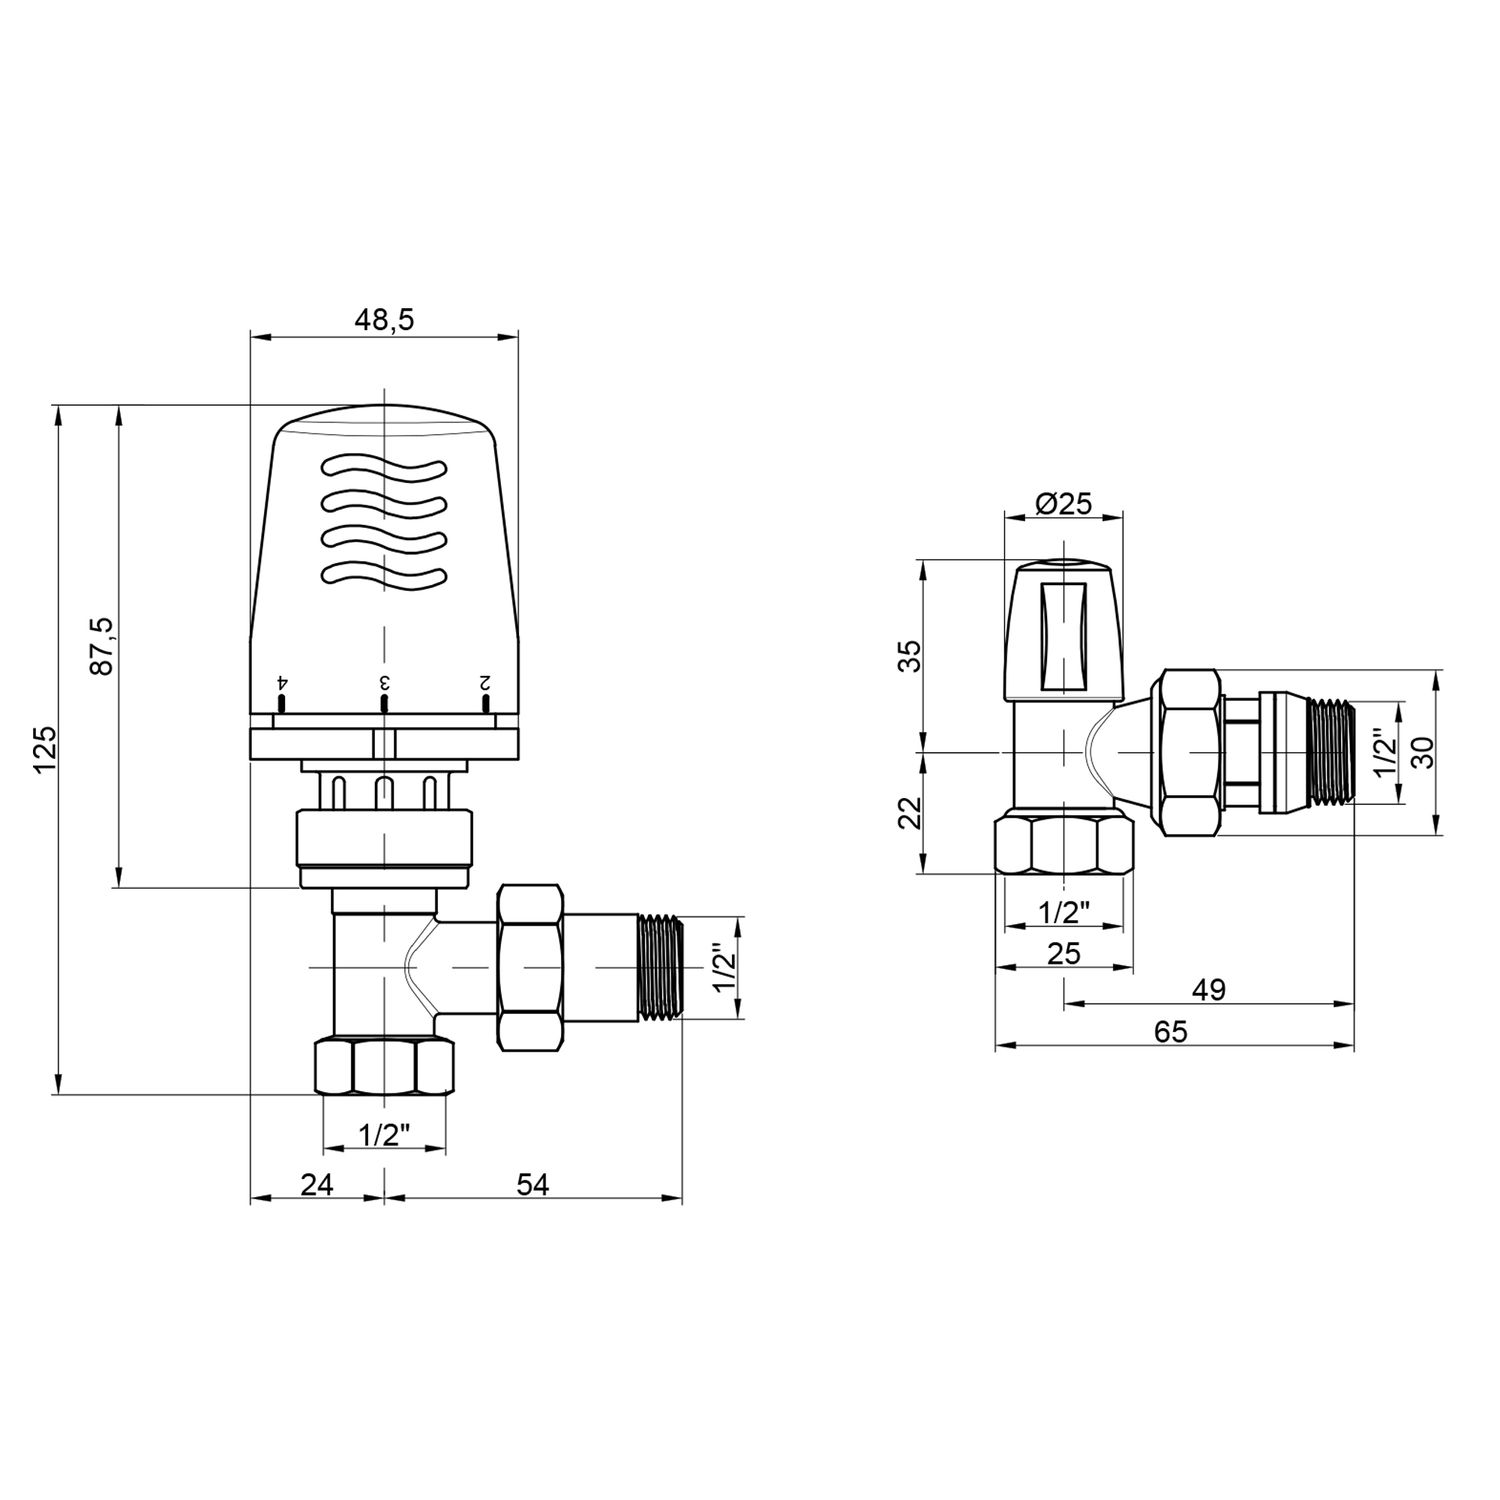 Термокомплект Icma 1/2" с антипротечкой угловой №KIT_1100+774-940+805-940